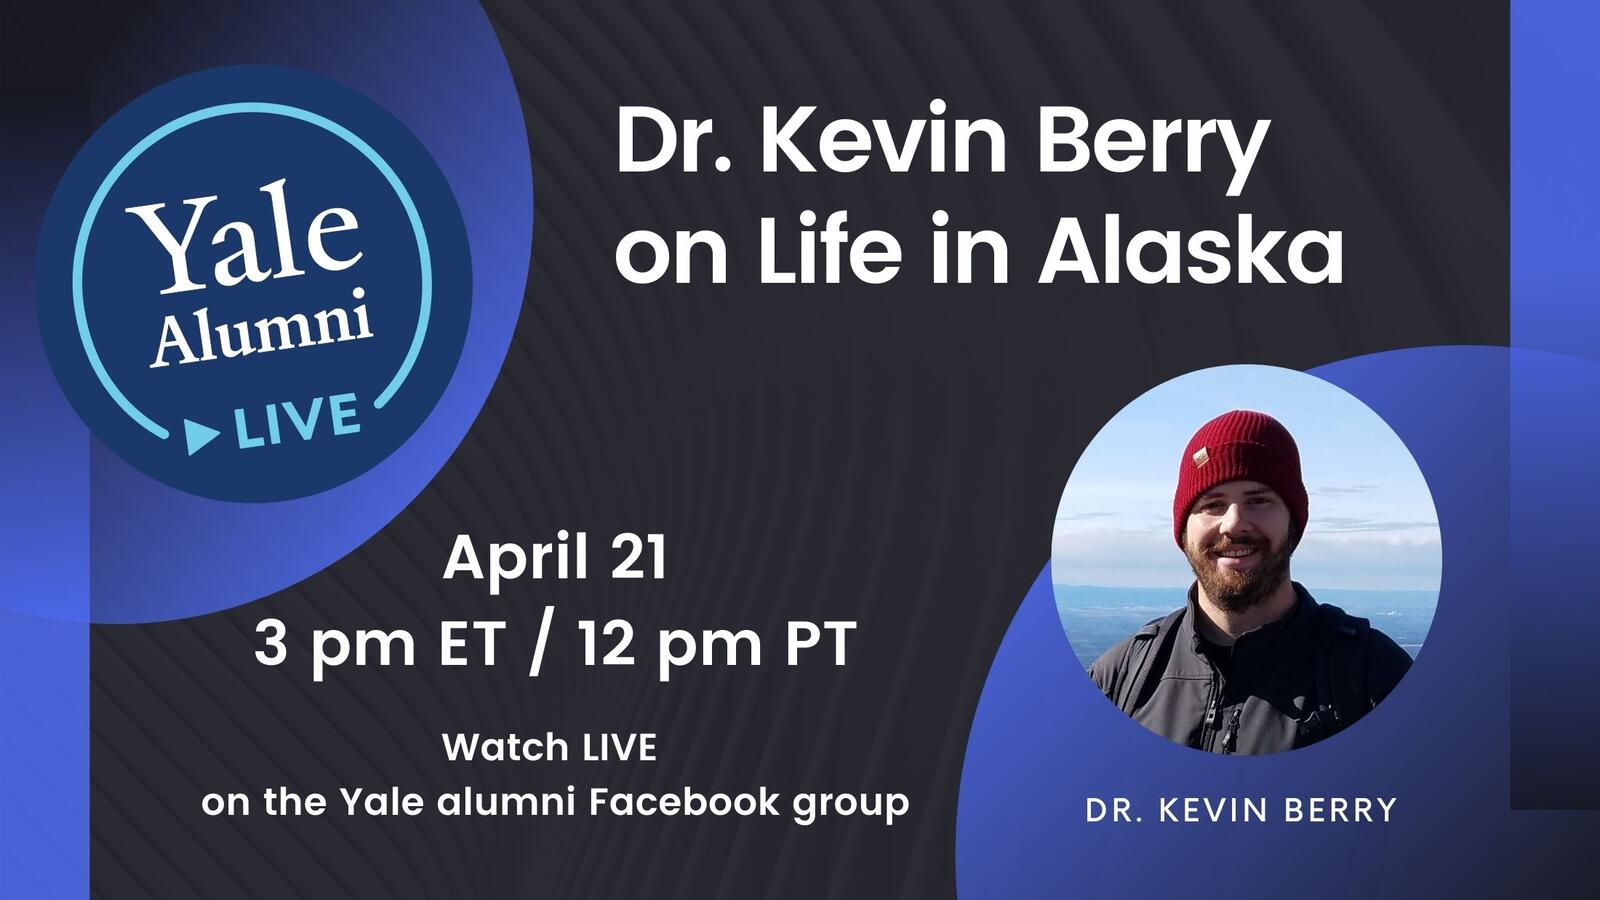 Yale Alumni LIVE: Dr. Kevin Berry on Life in Alaska 